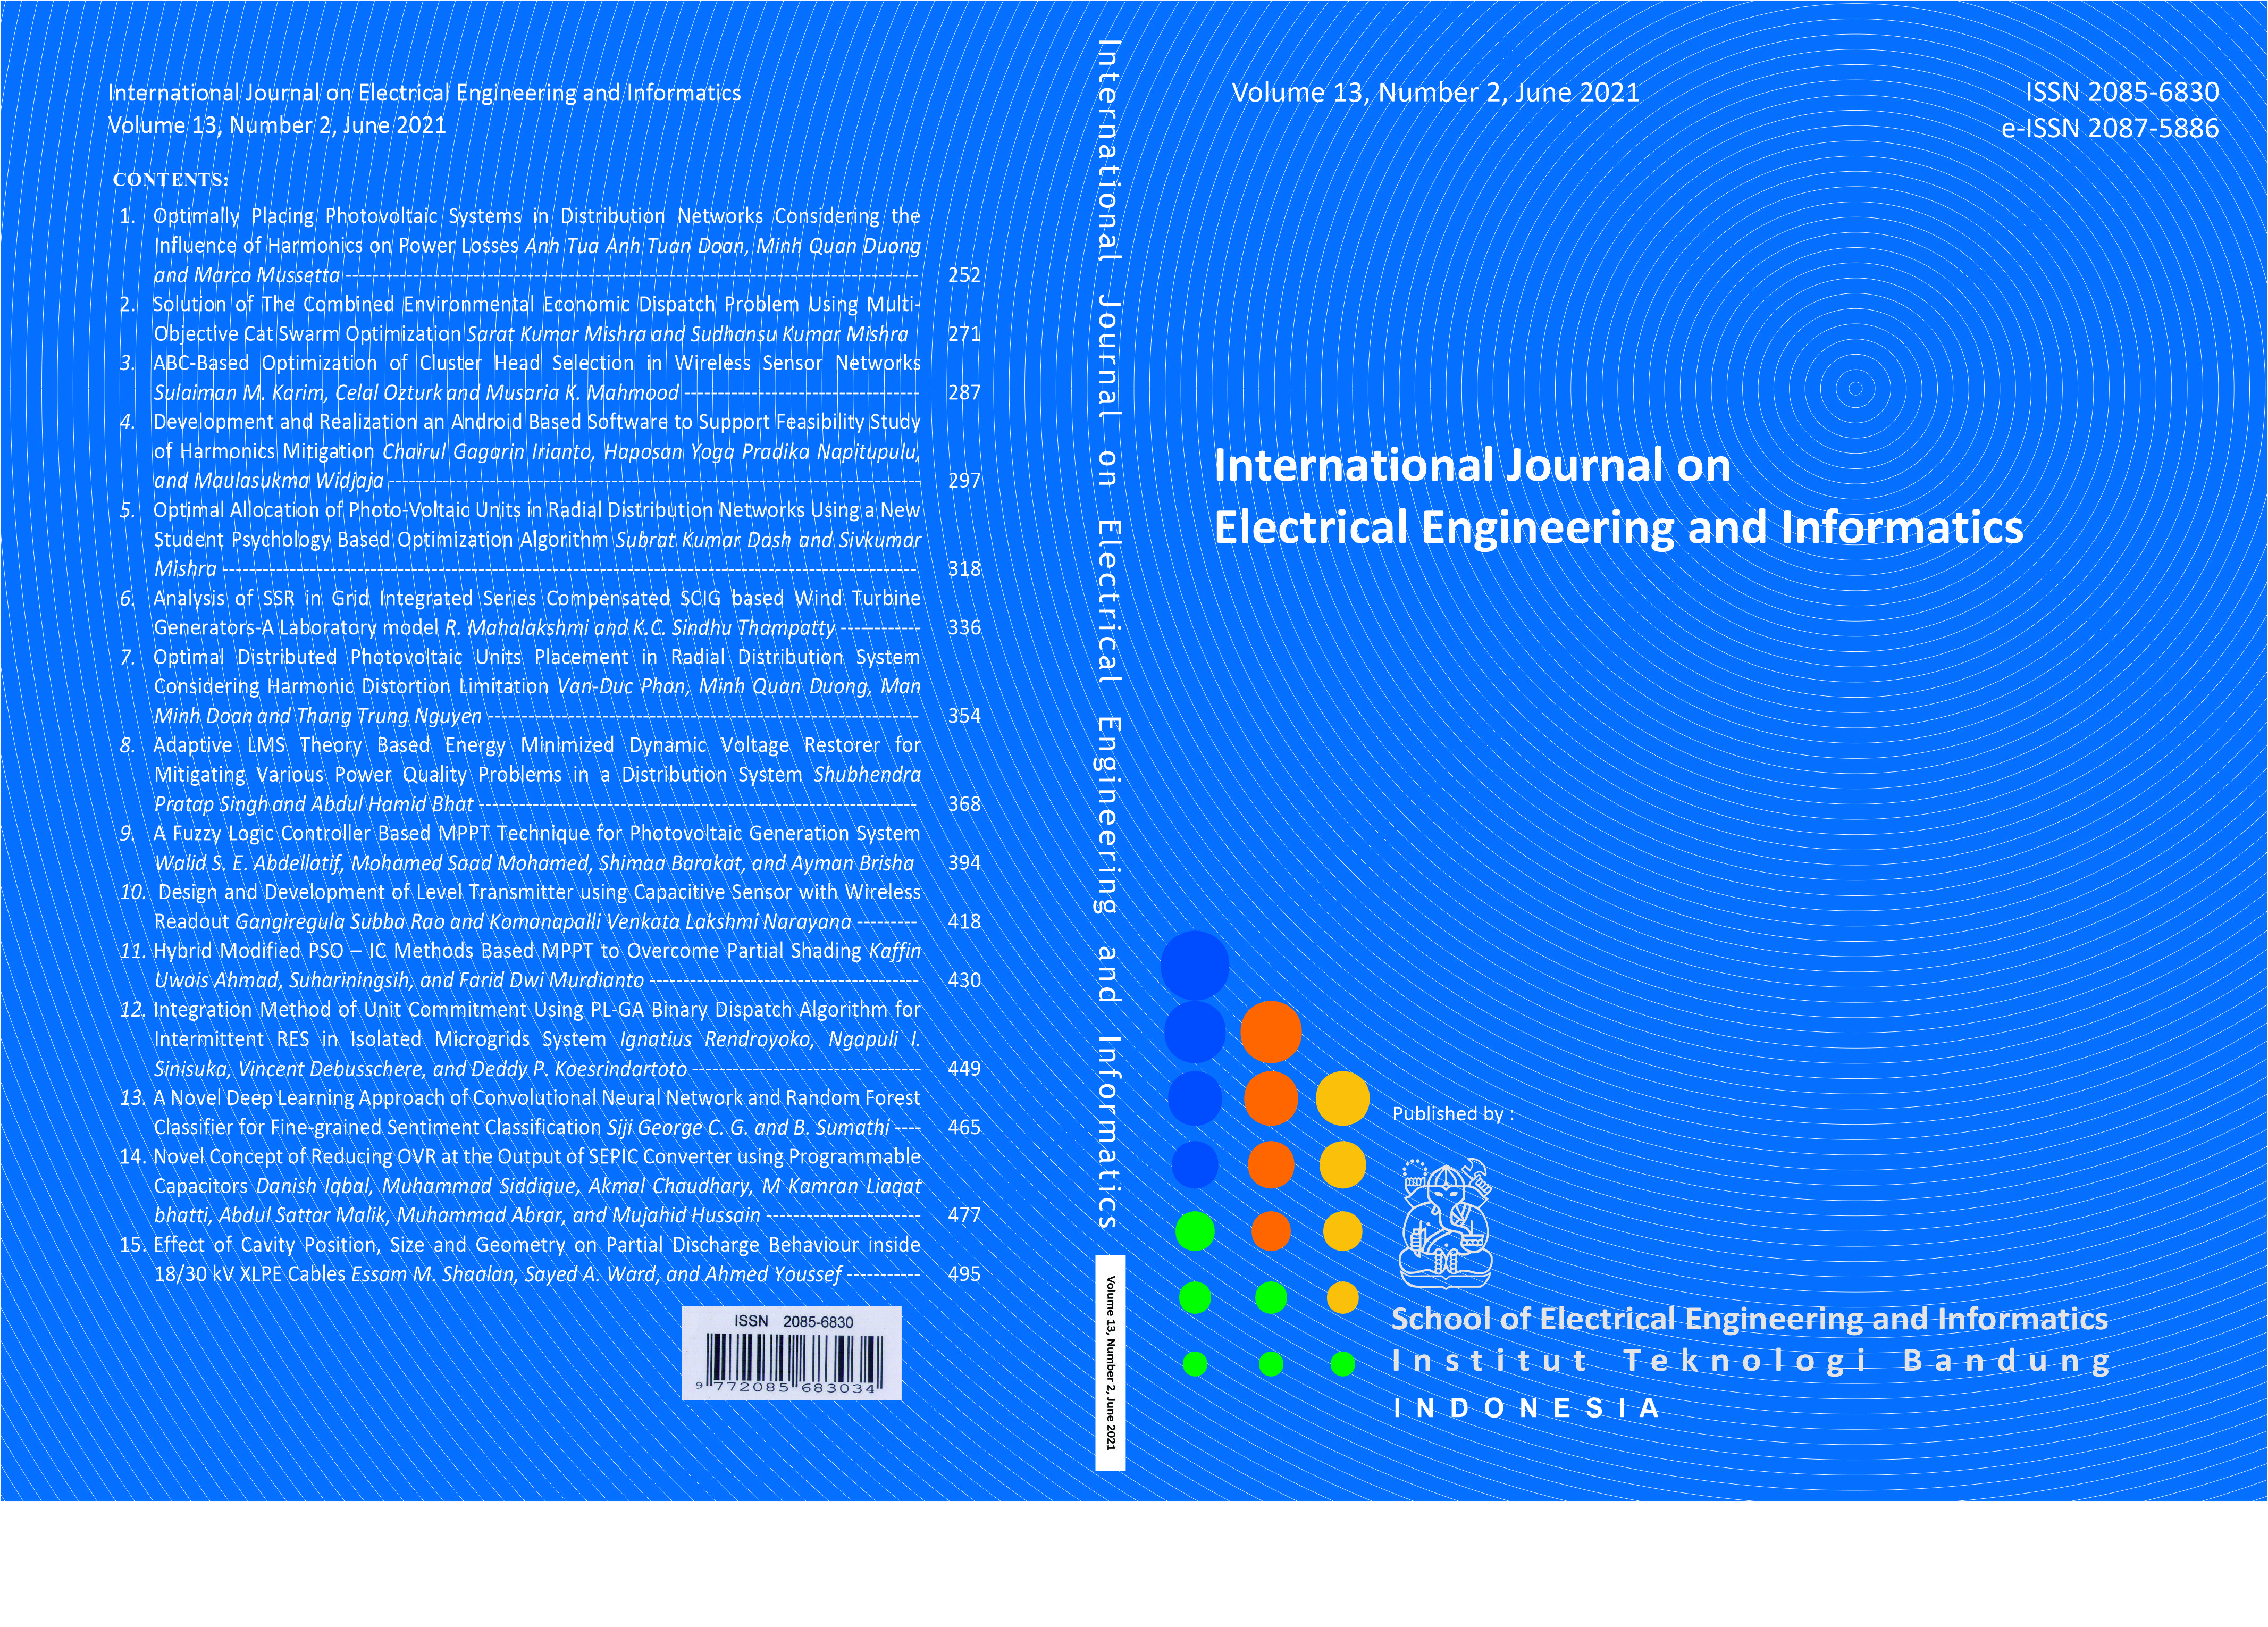 Journal cover Vol. 13 No. 2 June 2021